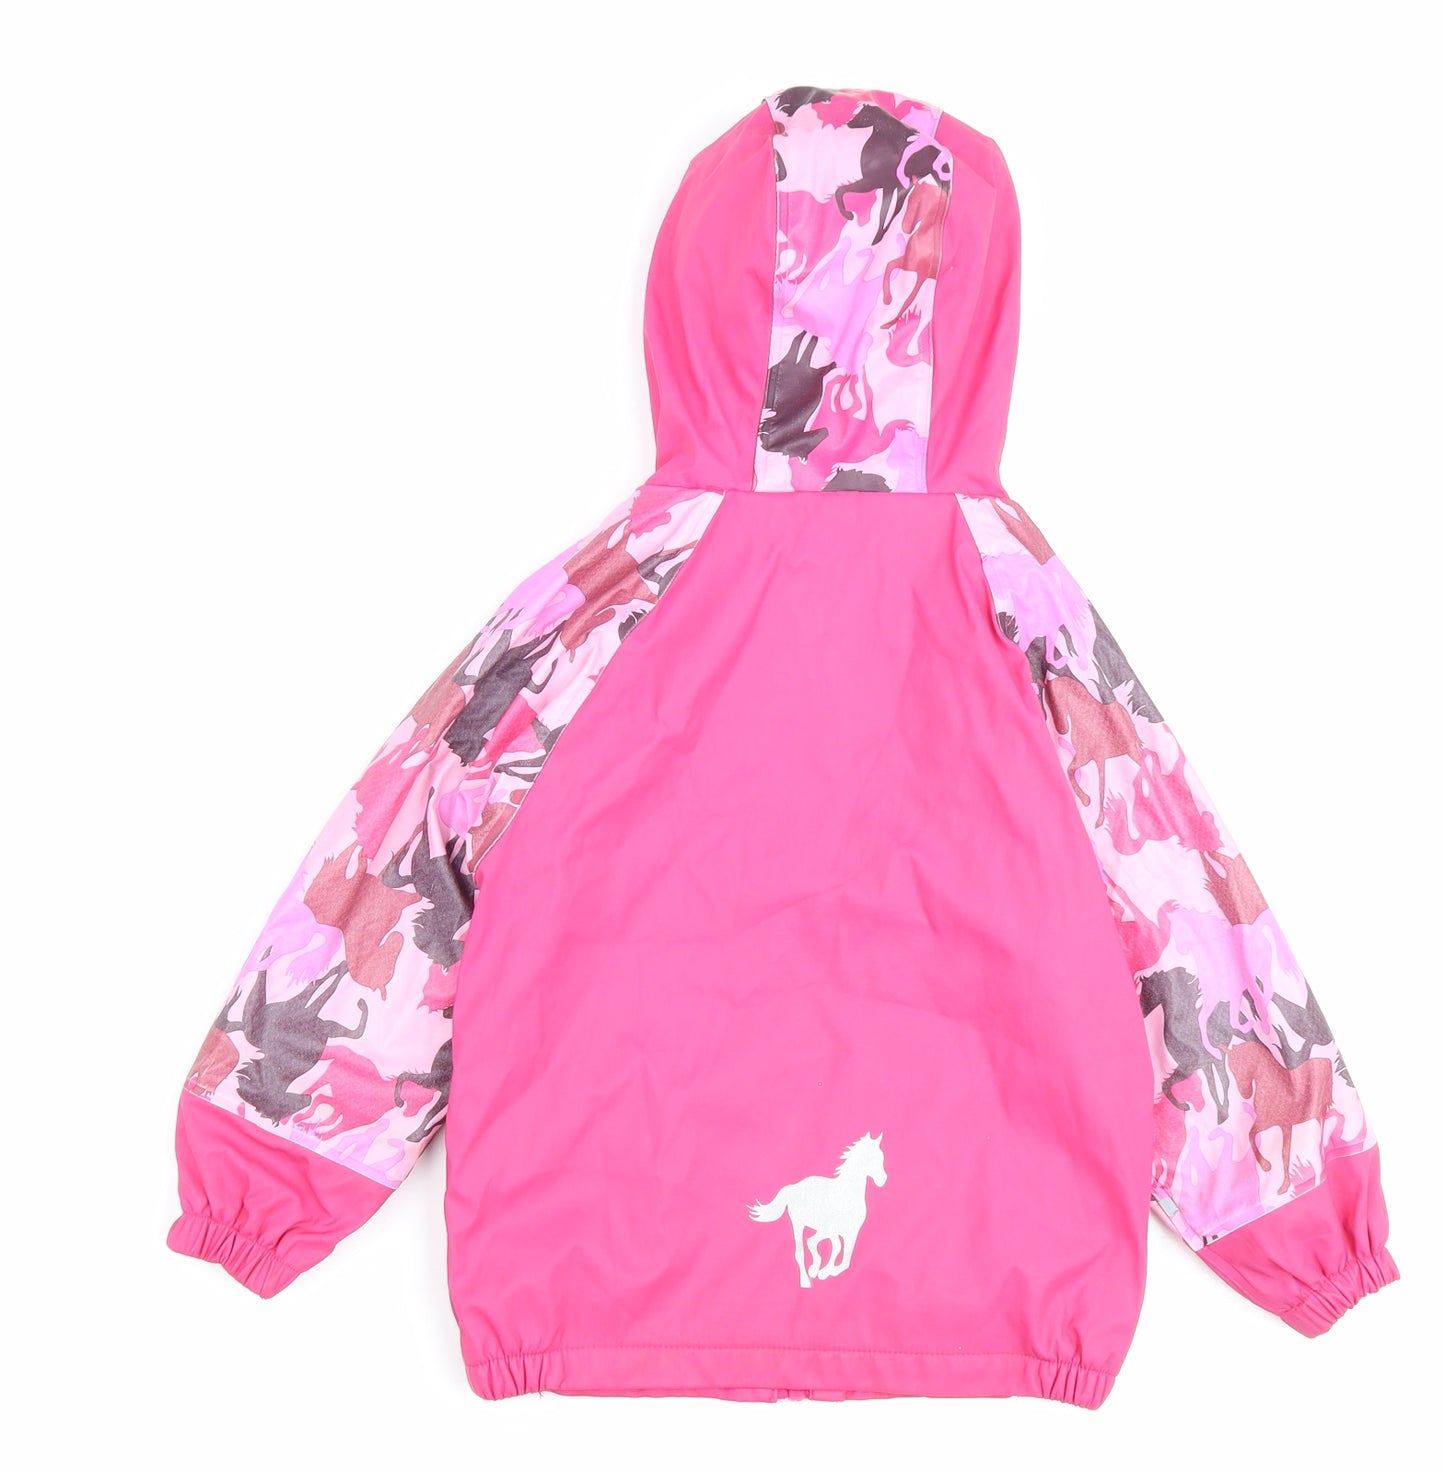 Lupilu Girls Pink Geometric Windbreaker Jacket Size 2 Years Zip - Unicorn